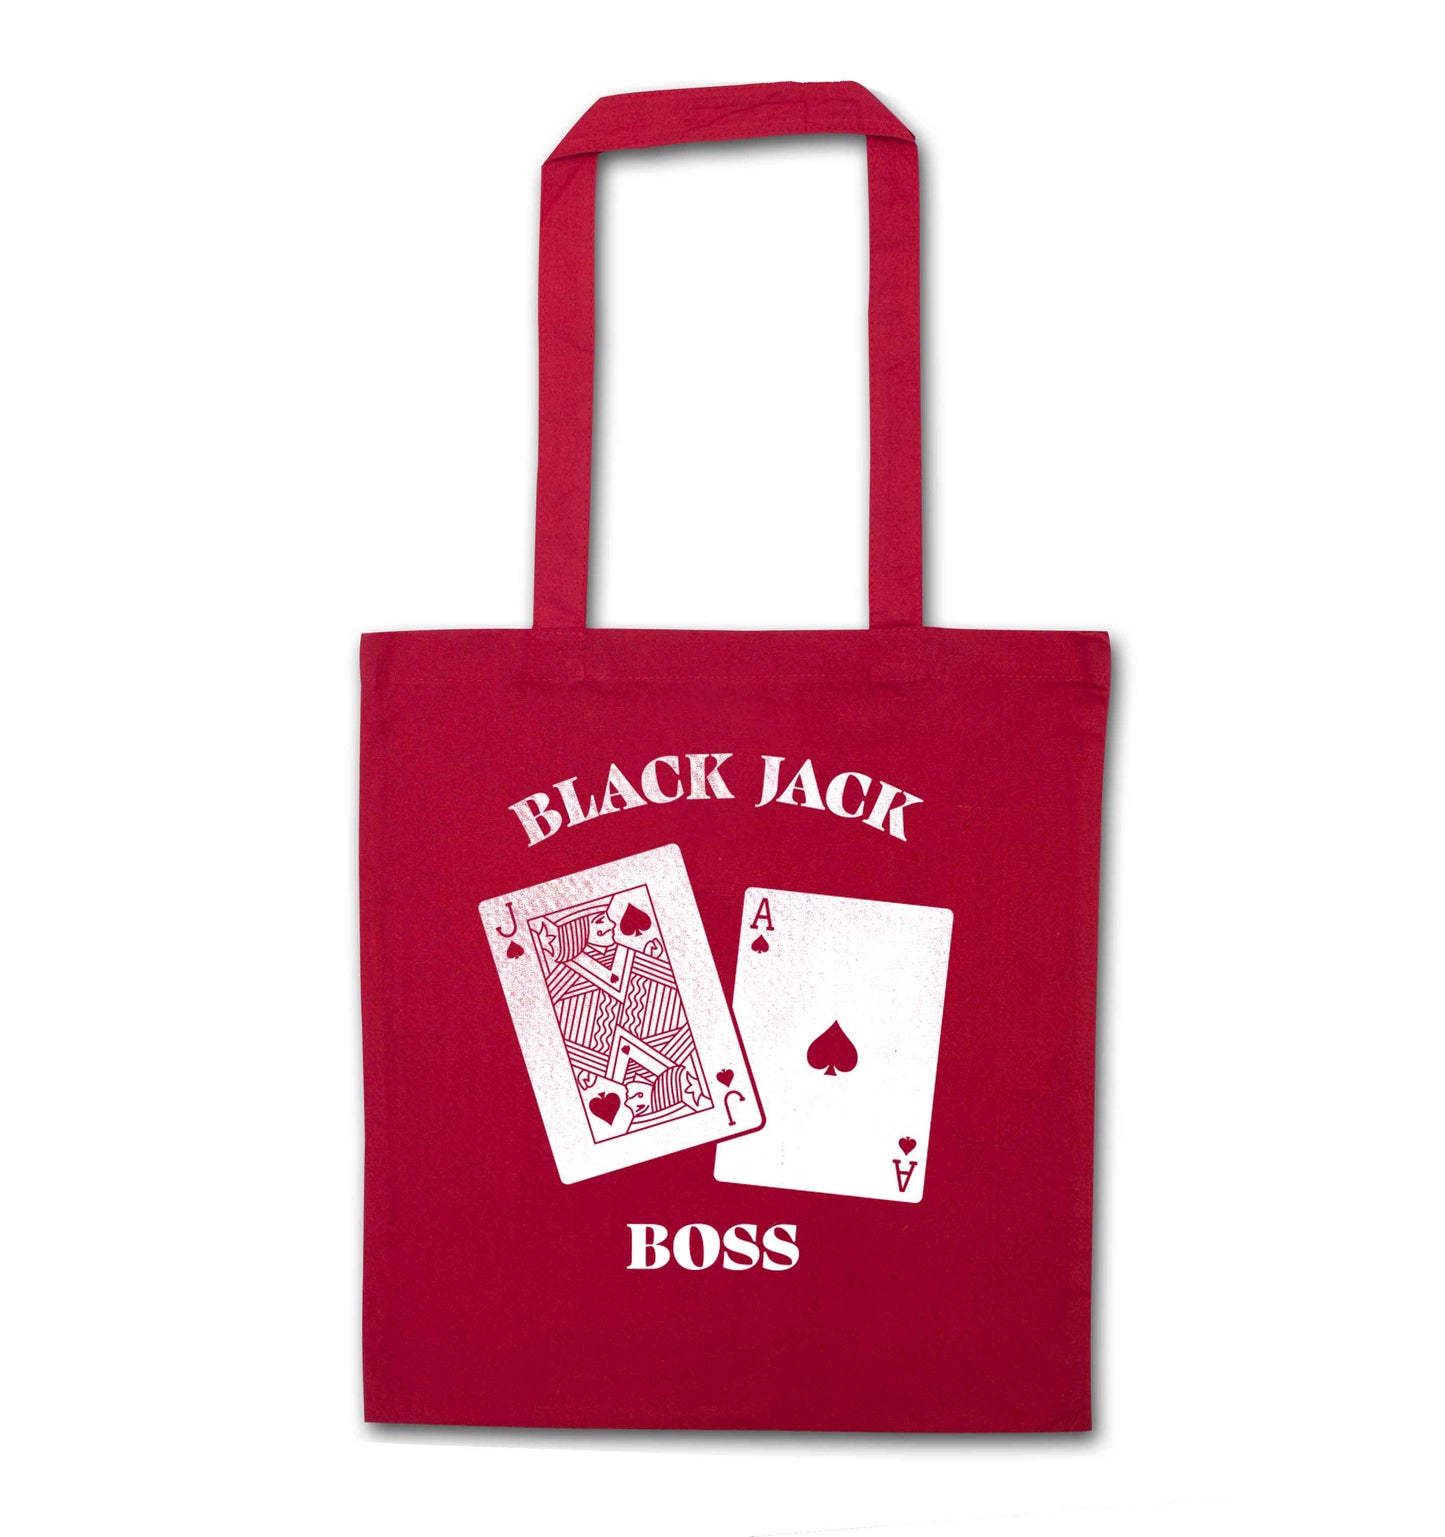 Blackjack boss red tote bag